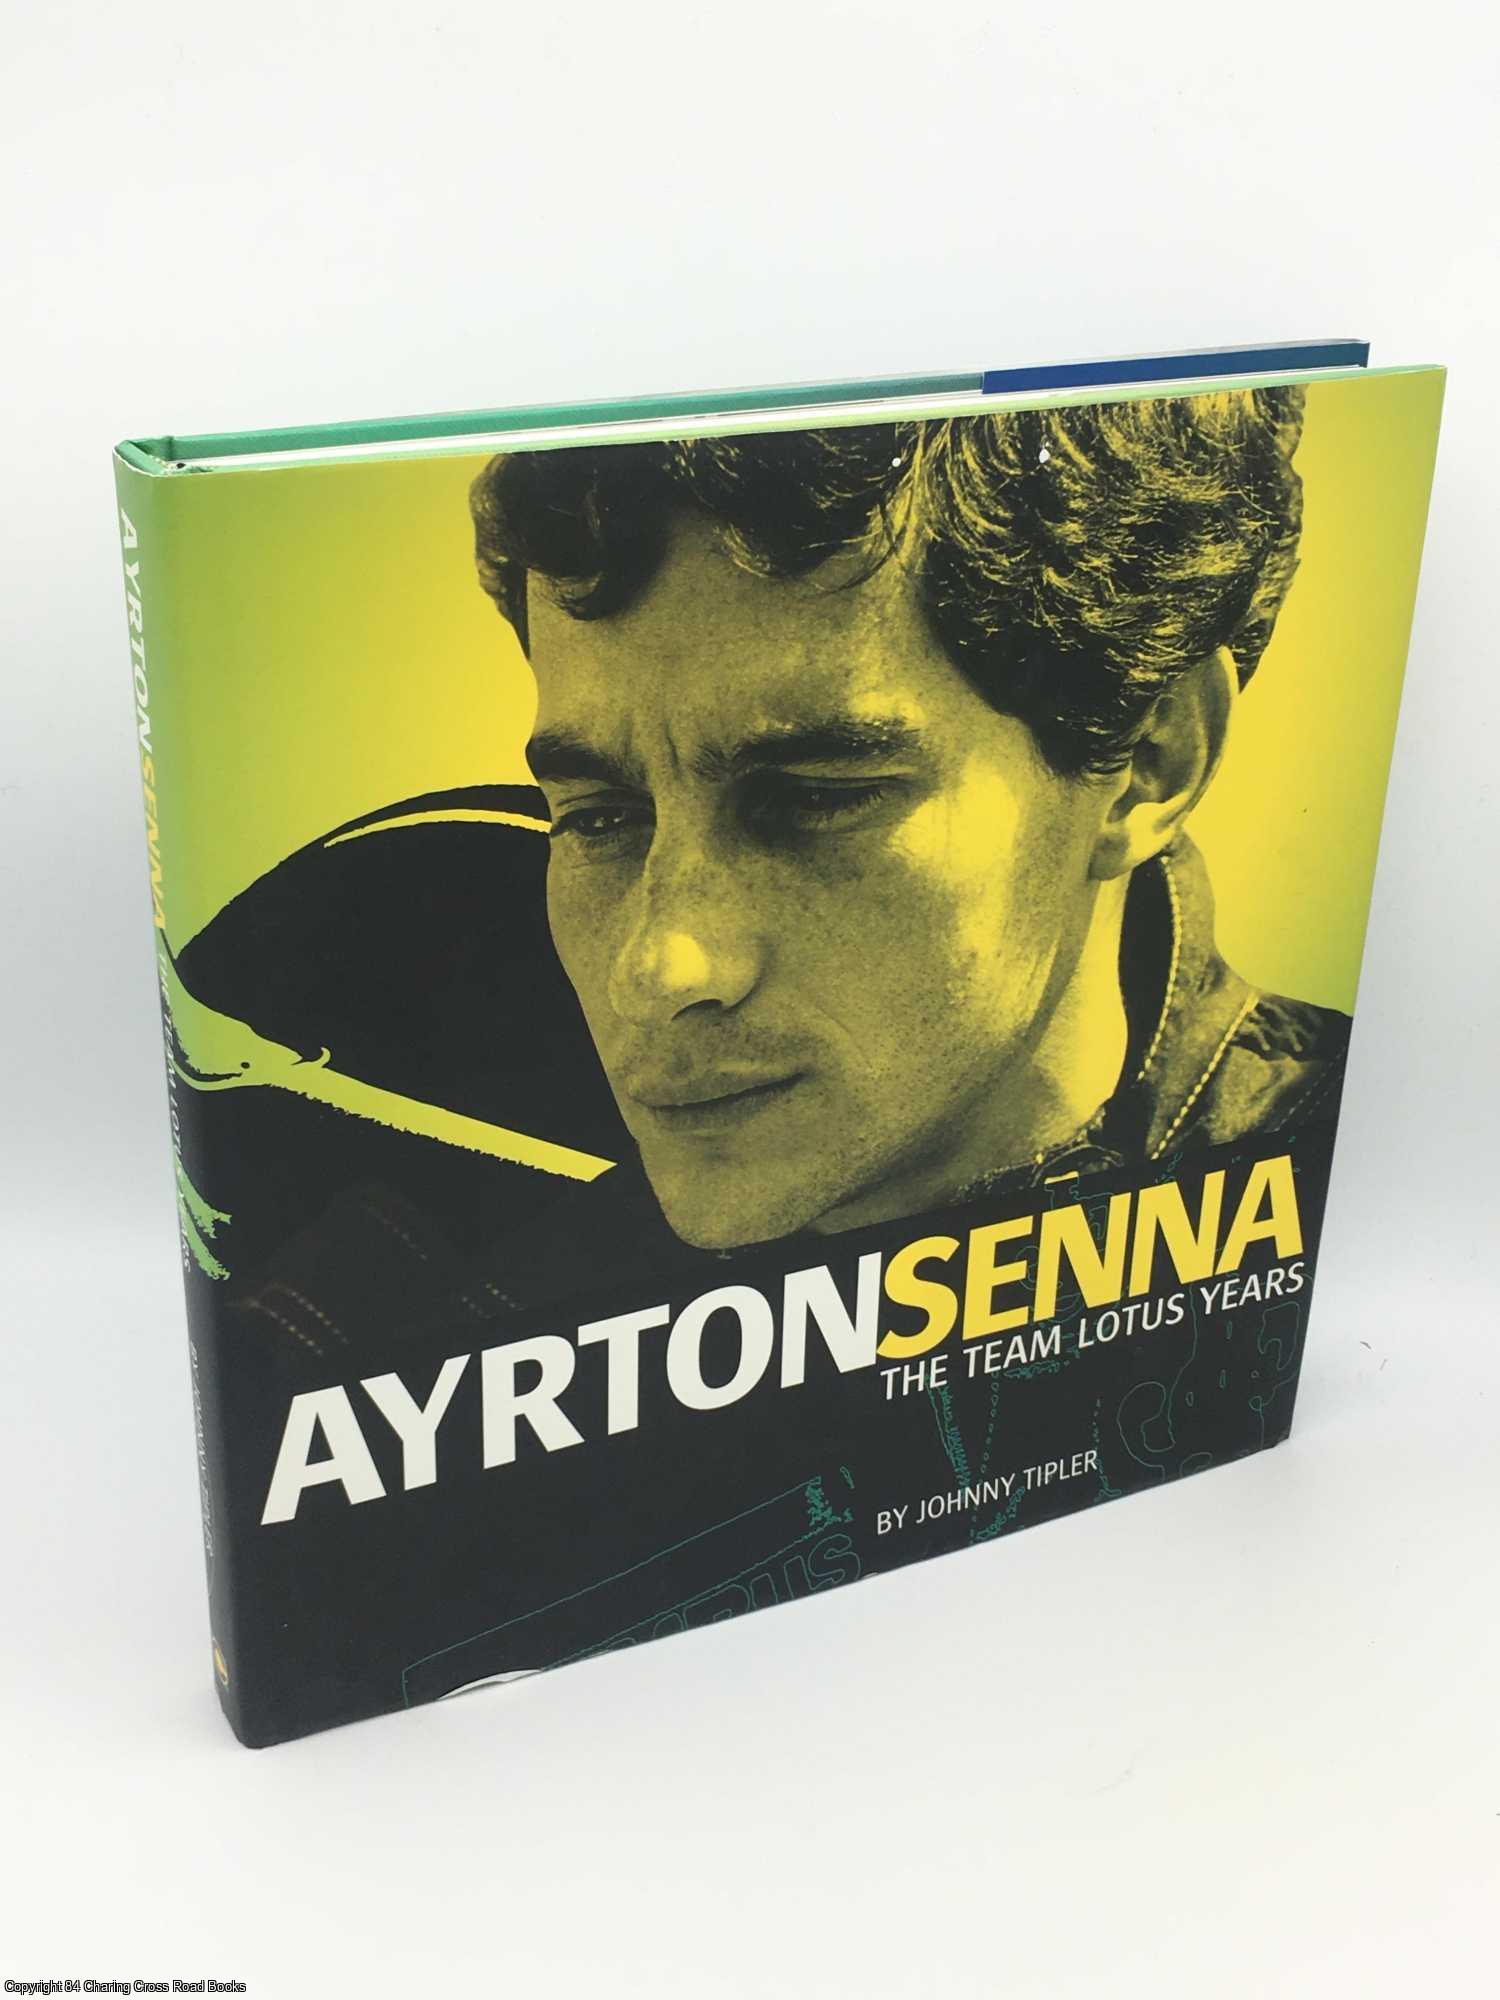 Tipler, Johnny - Ayrton Senna - The Team Lotus Years